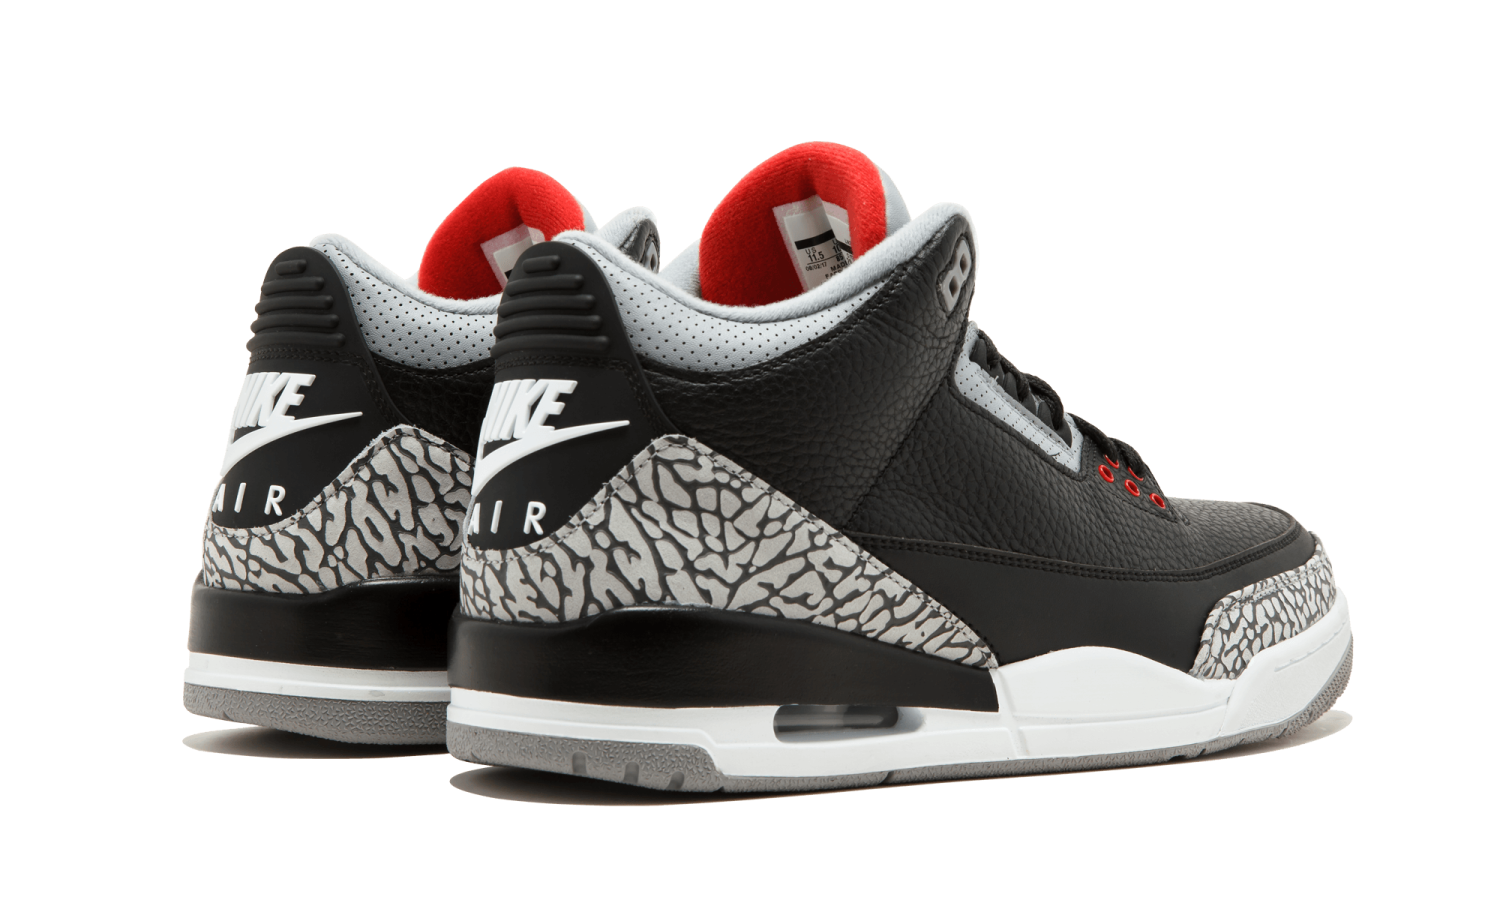 Jordan 3 OG “Black/Cement” фото кроссовок